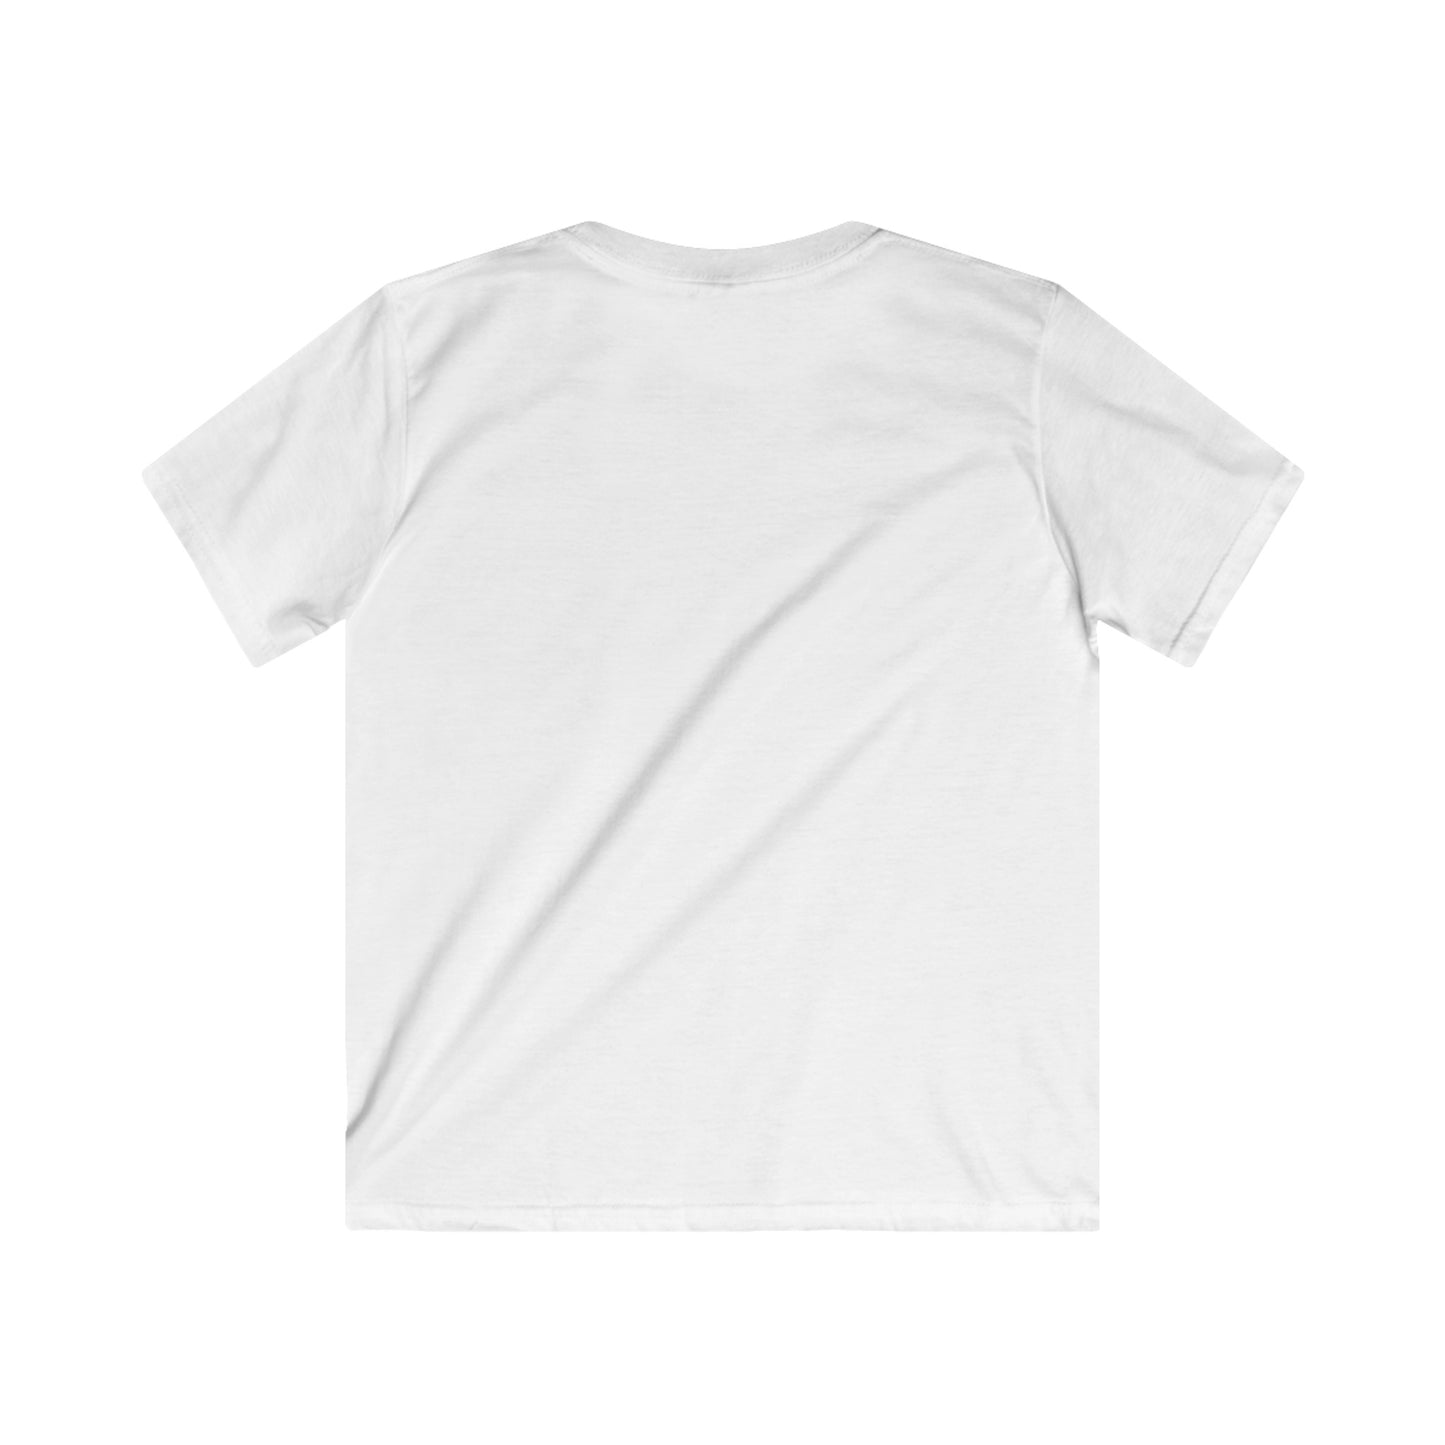 Tee-shirt enfant Ours blanc (à personnaliser)